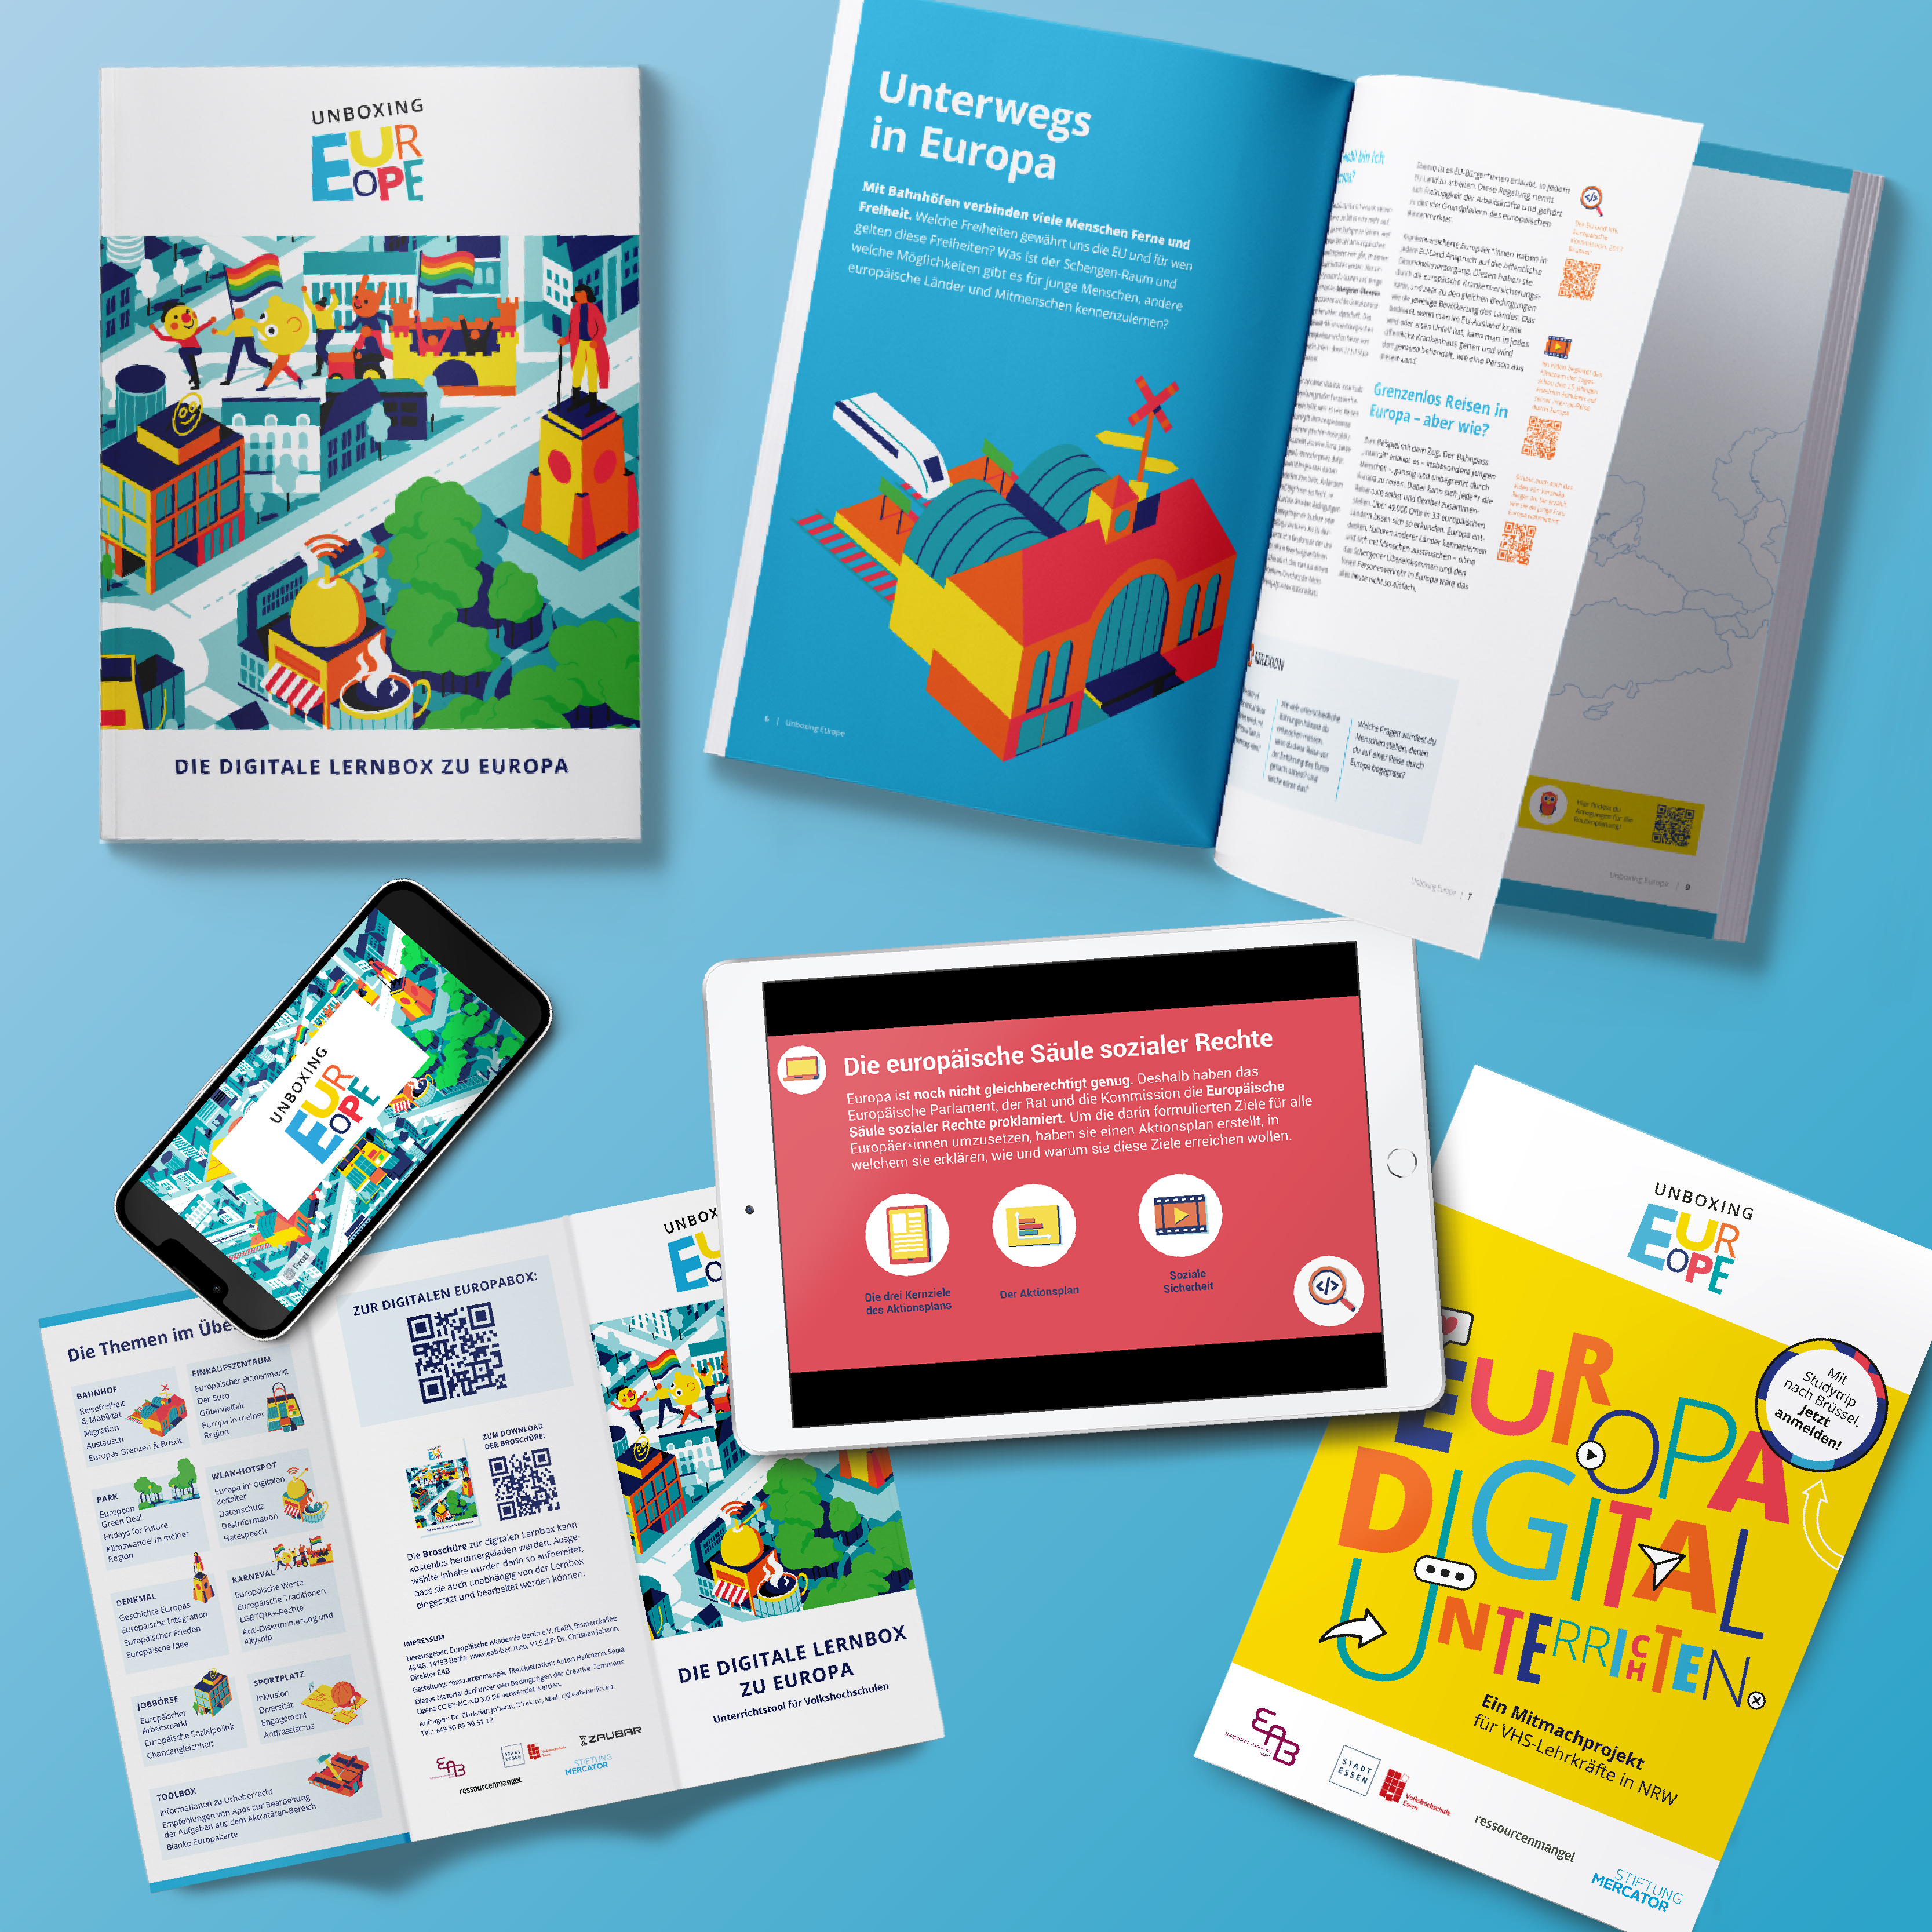 Image for Unboxing Europe - Digitale Toolbox und hybride Lernwelt zu Europa